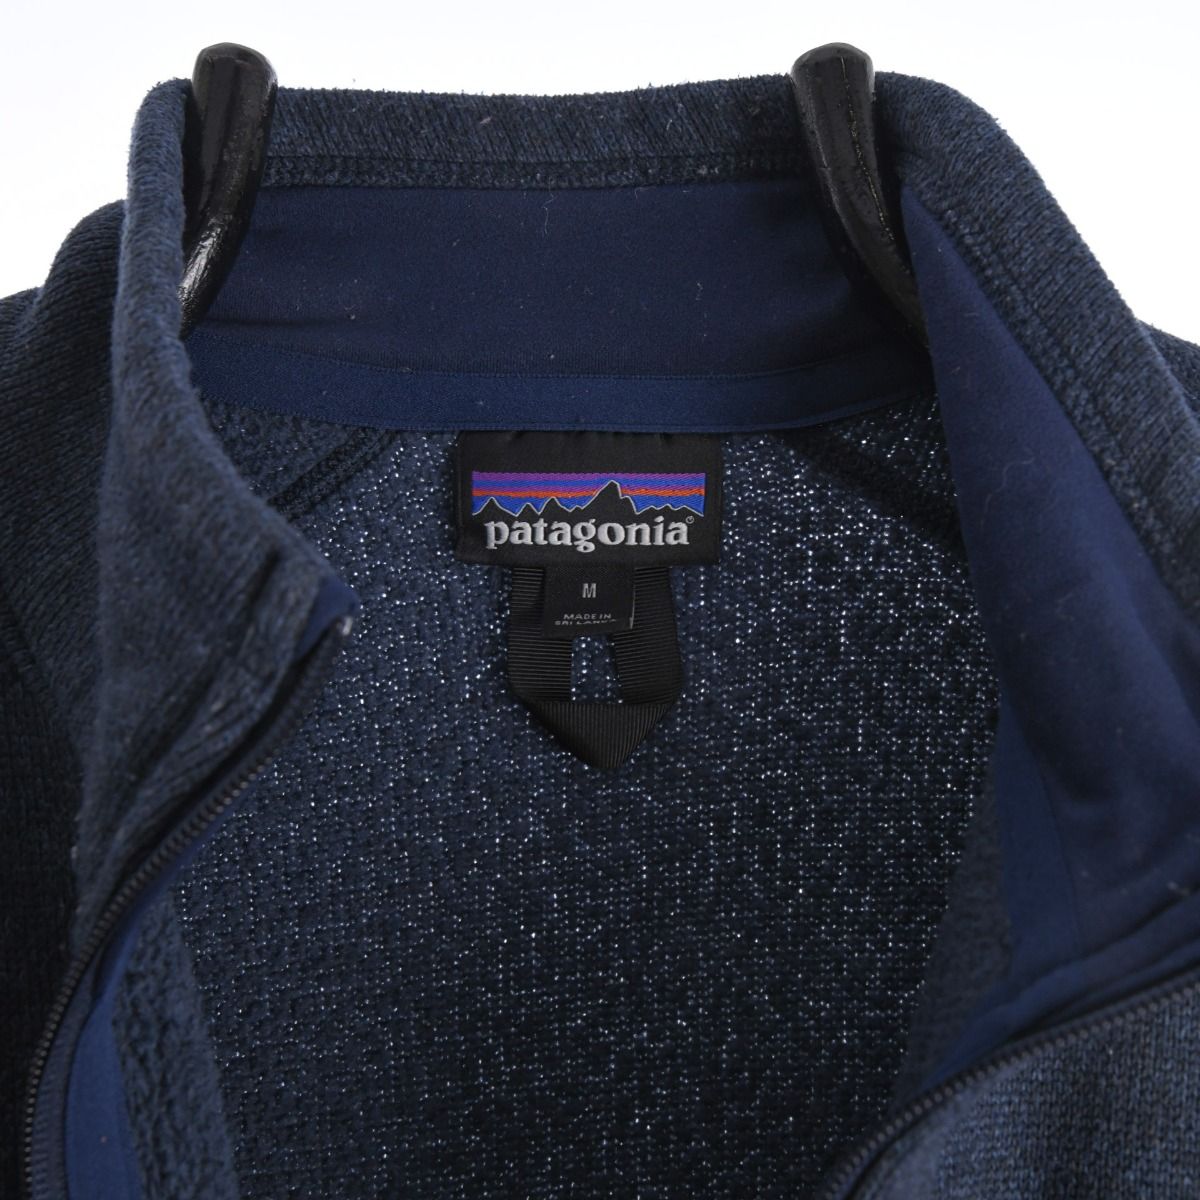 Patagonia 2017 Better Sweater Fleece